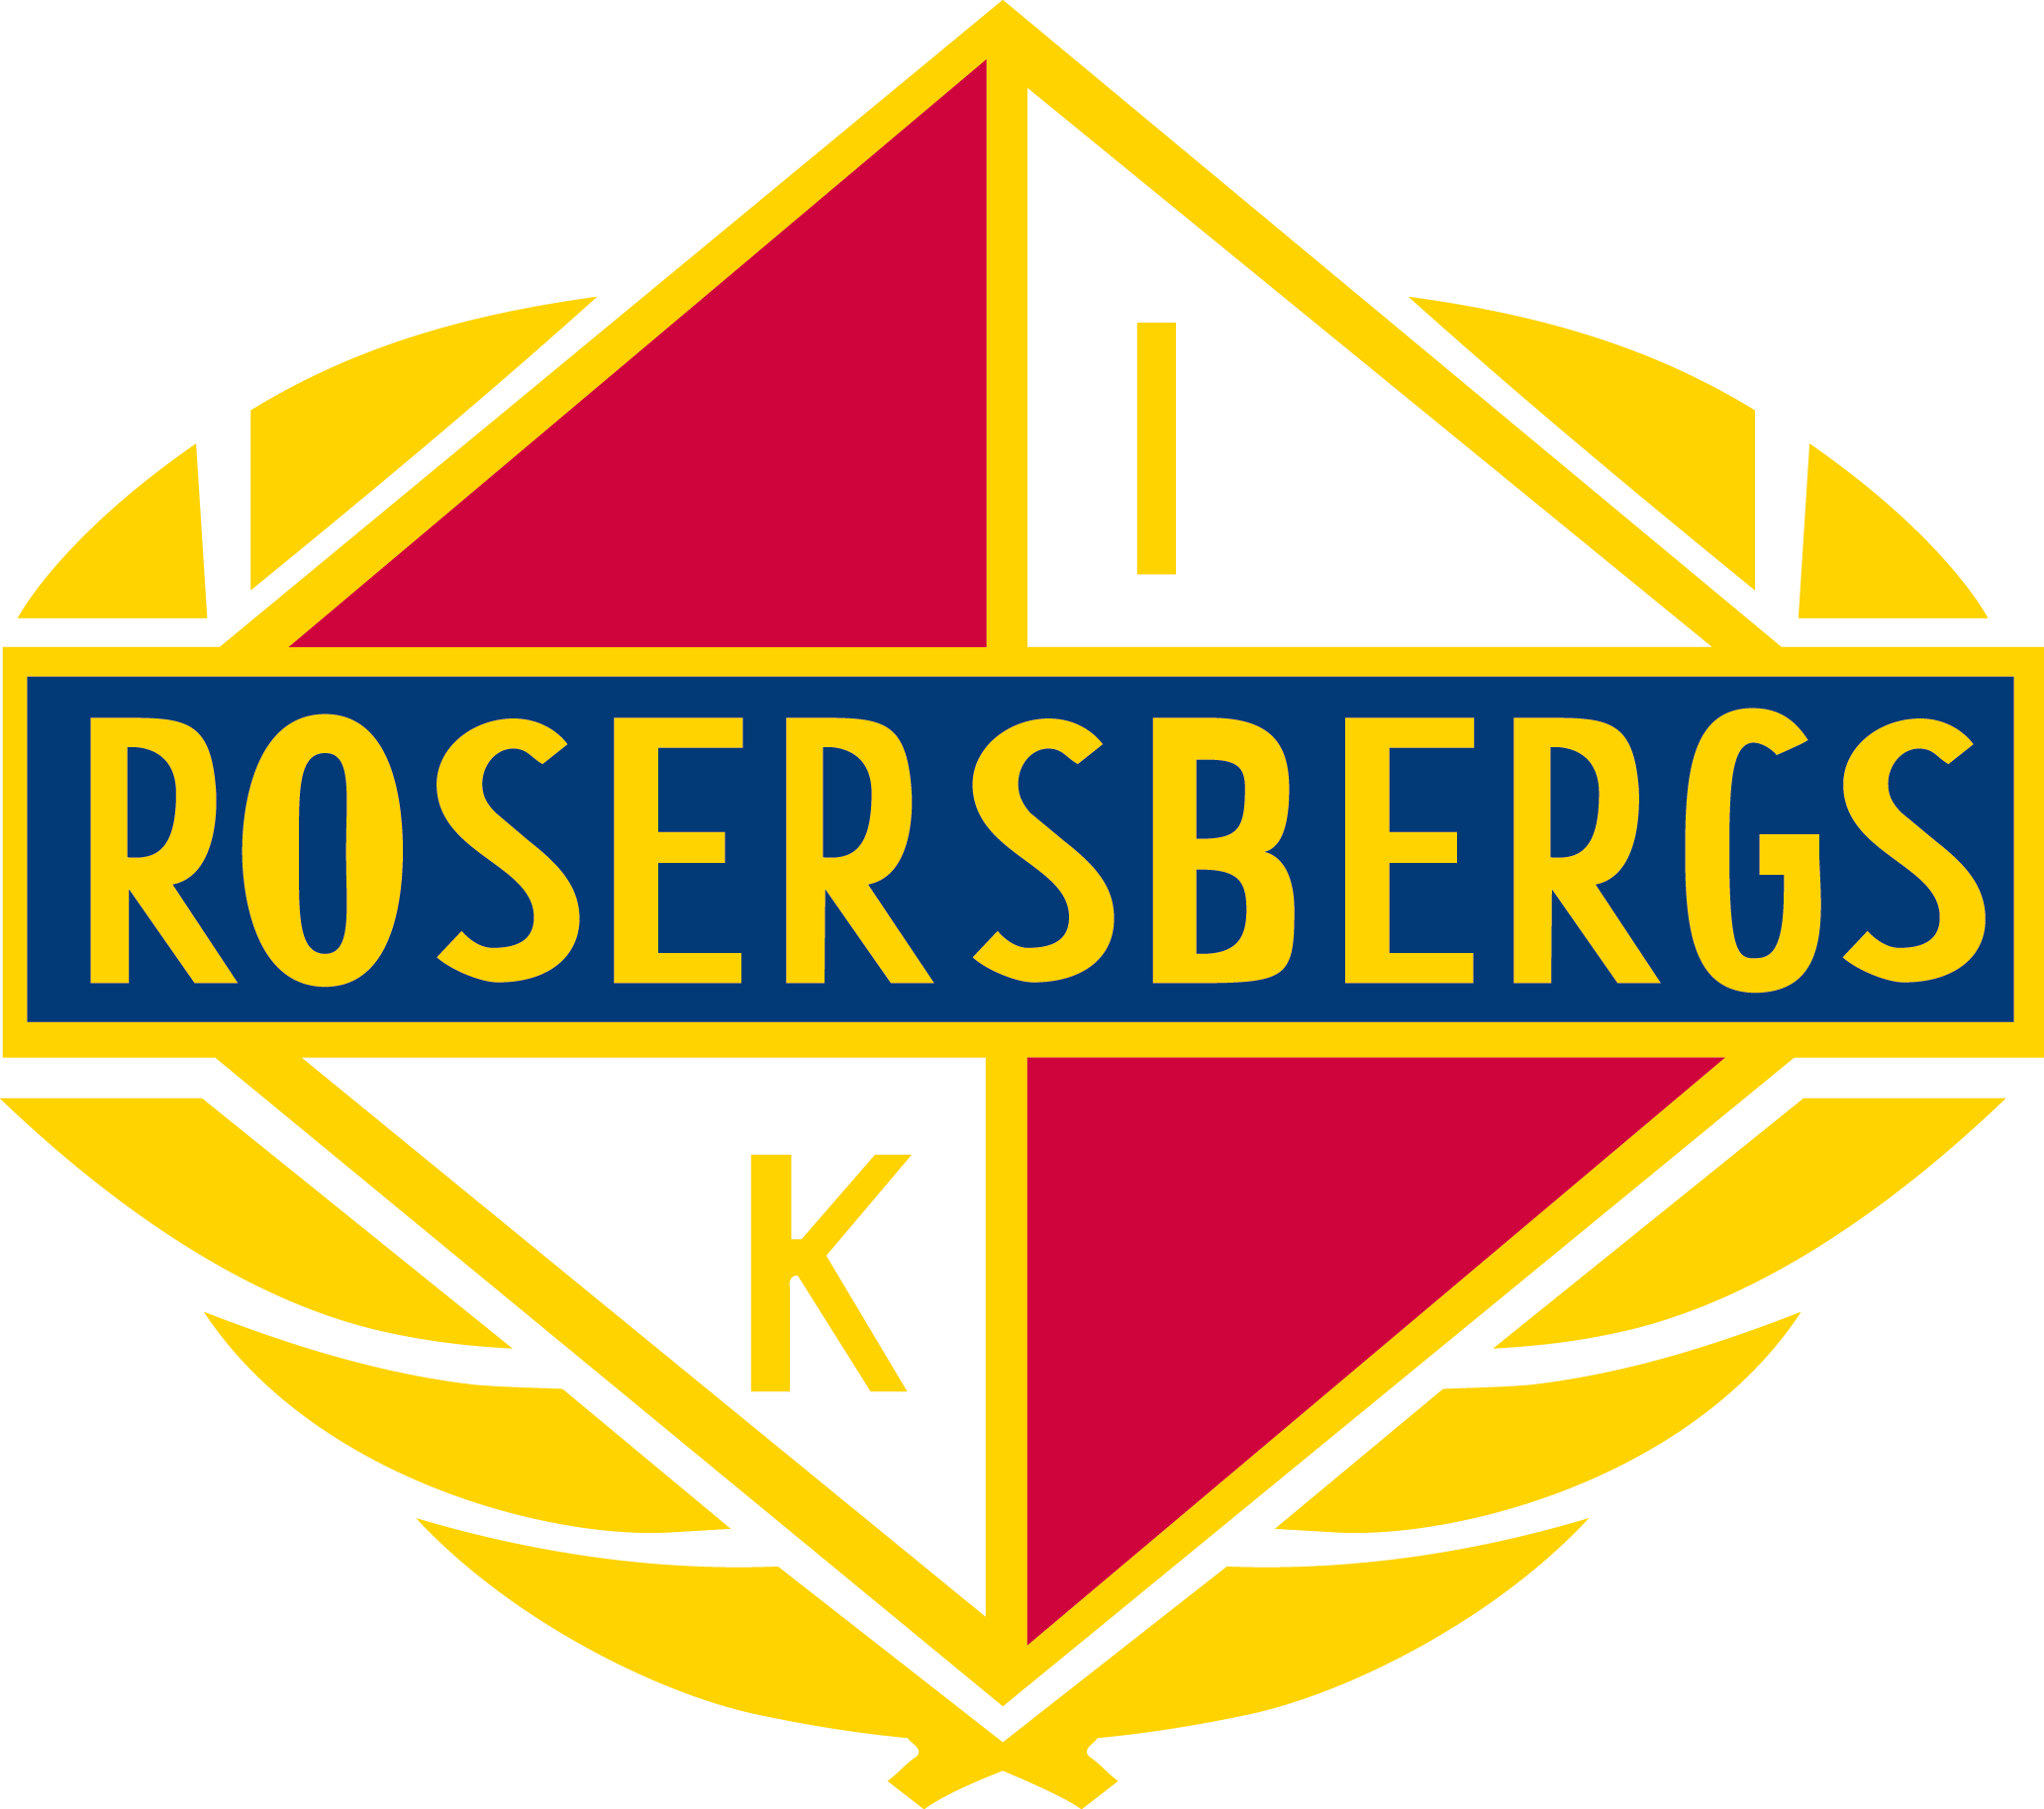 Rosersbergs IK 2